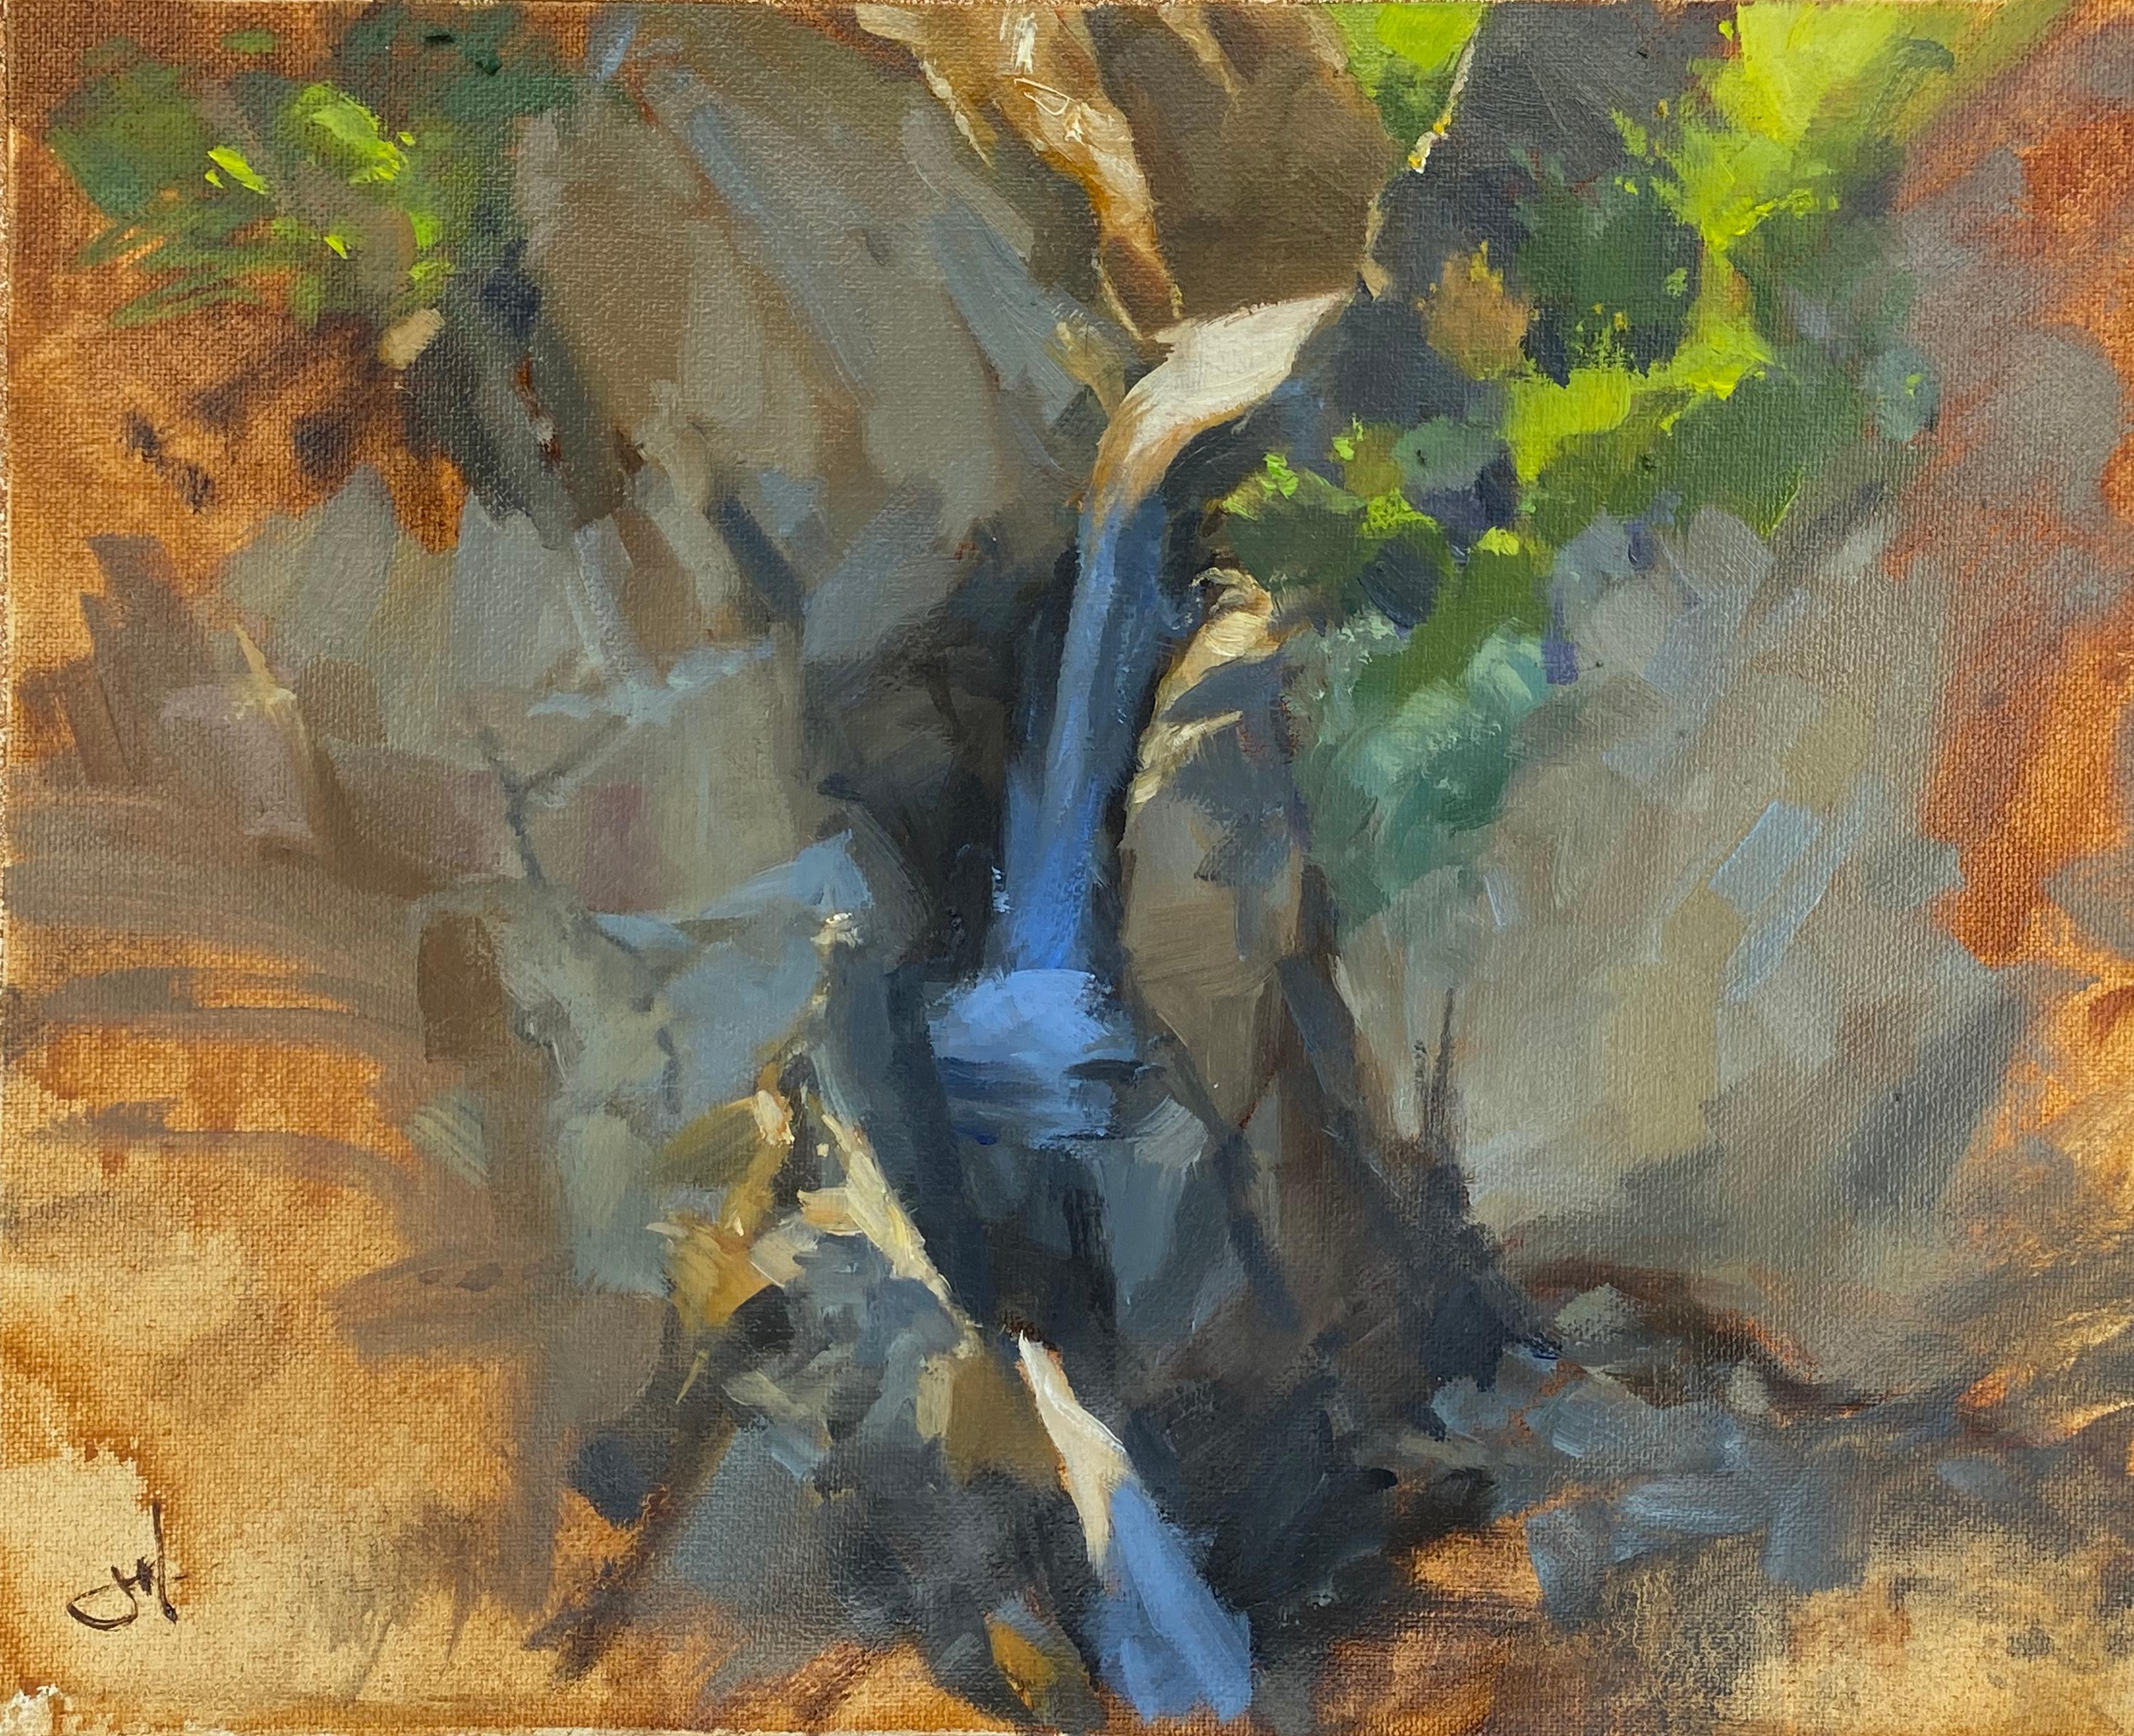 Judd Mercer Landscape Painting - "Big Sur Falls" Oil Painting